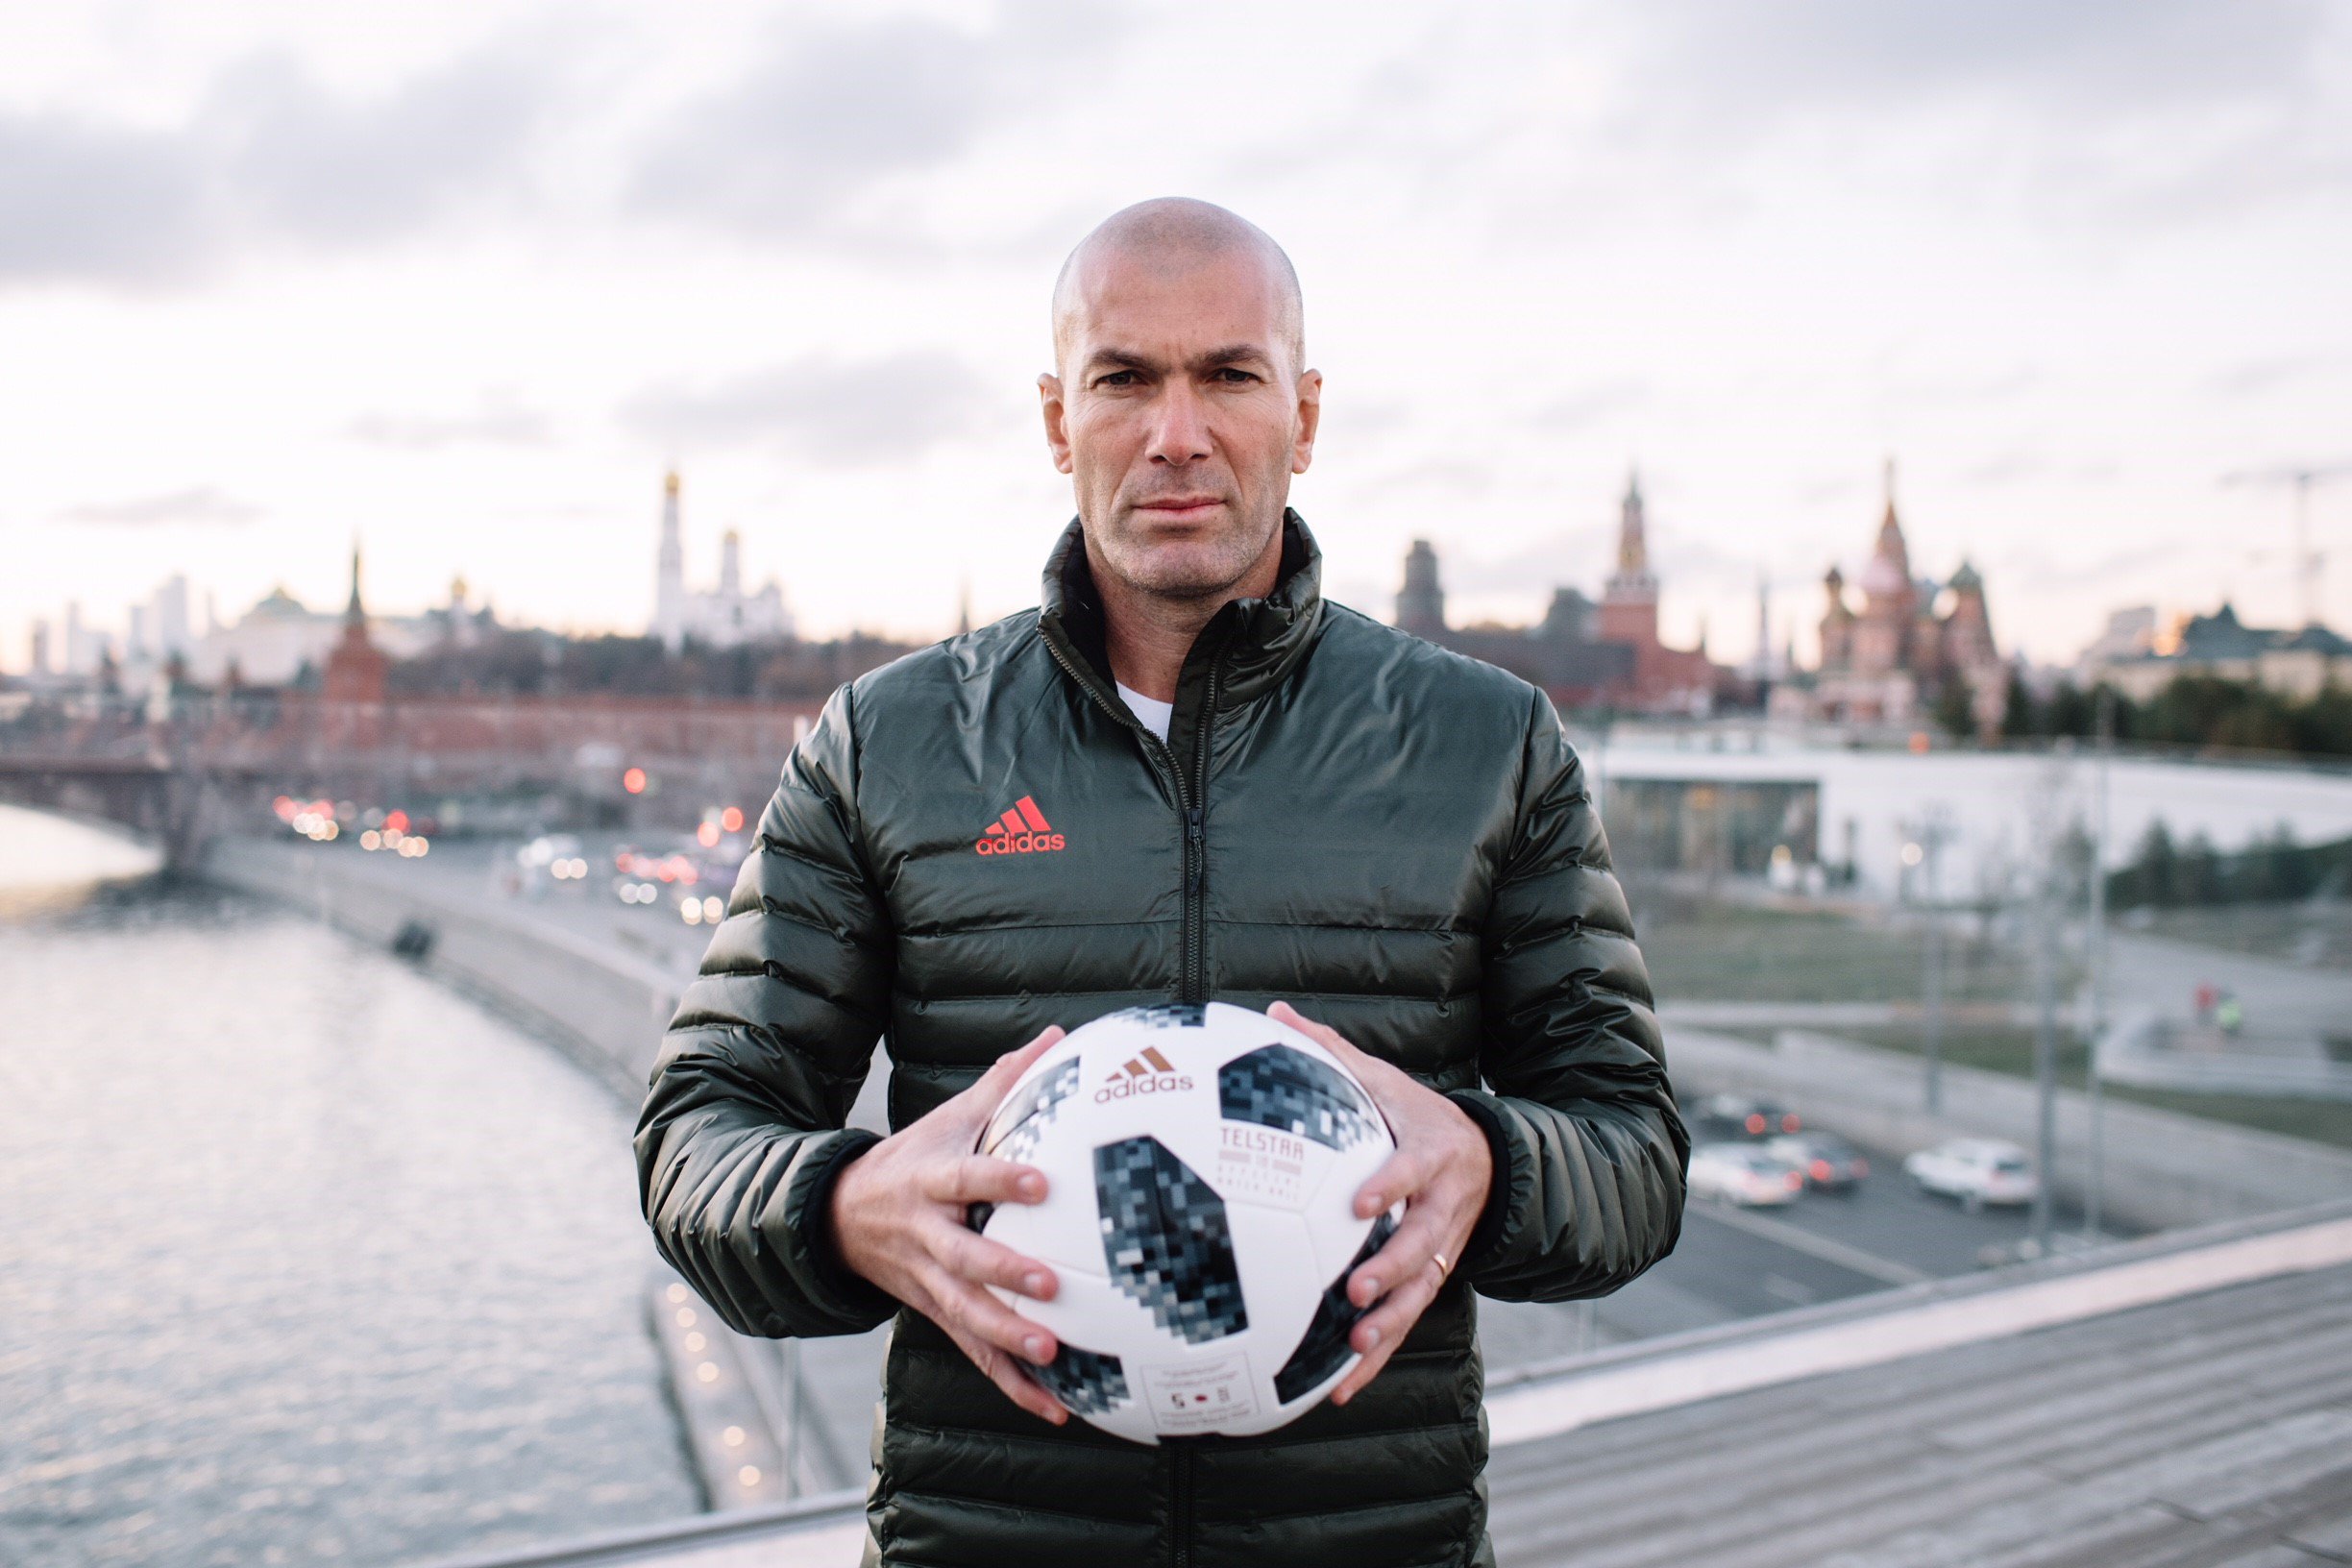 Real Madrid C.F. on Twitter: "🇷🇺🌍🏆 Zidane el el balón oficial del Mundial de 2018. #HereToCreate | @adidasfootball https://t.co/KjmukYUeHZ" / Twitter